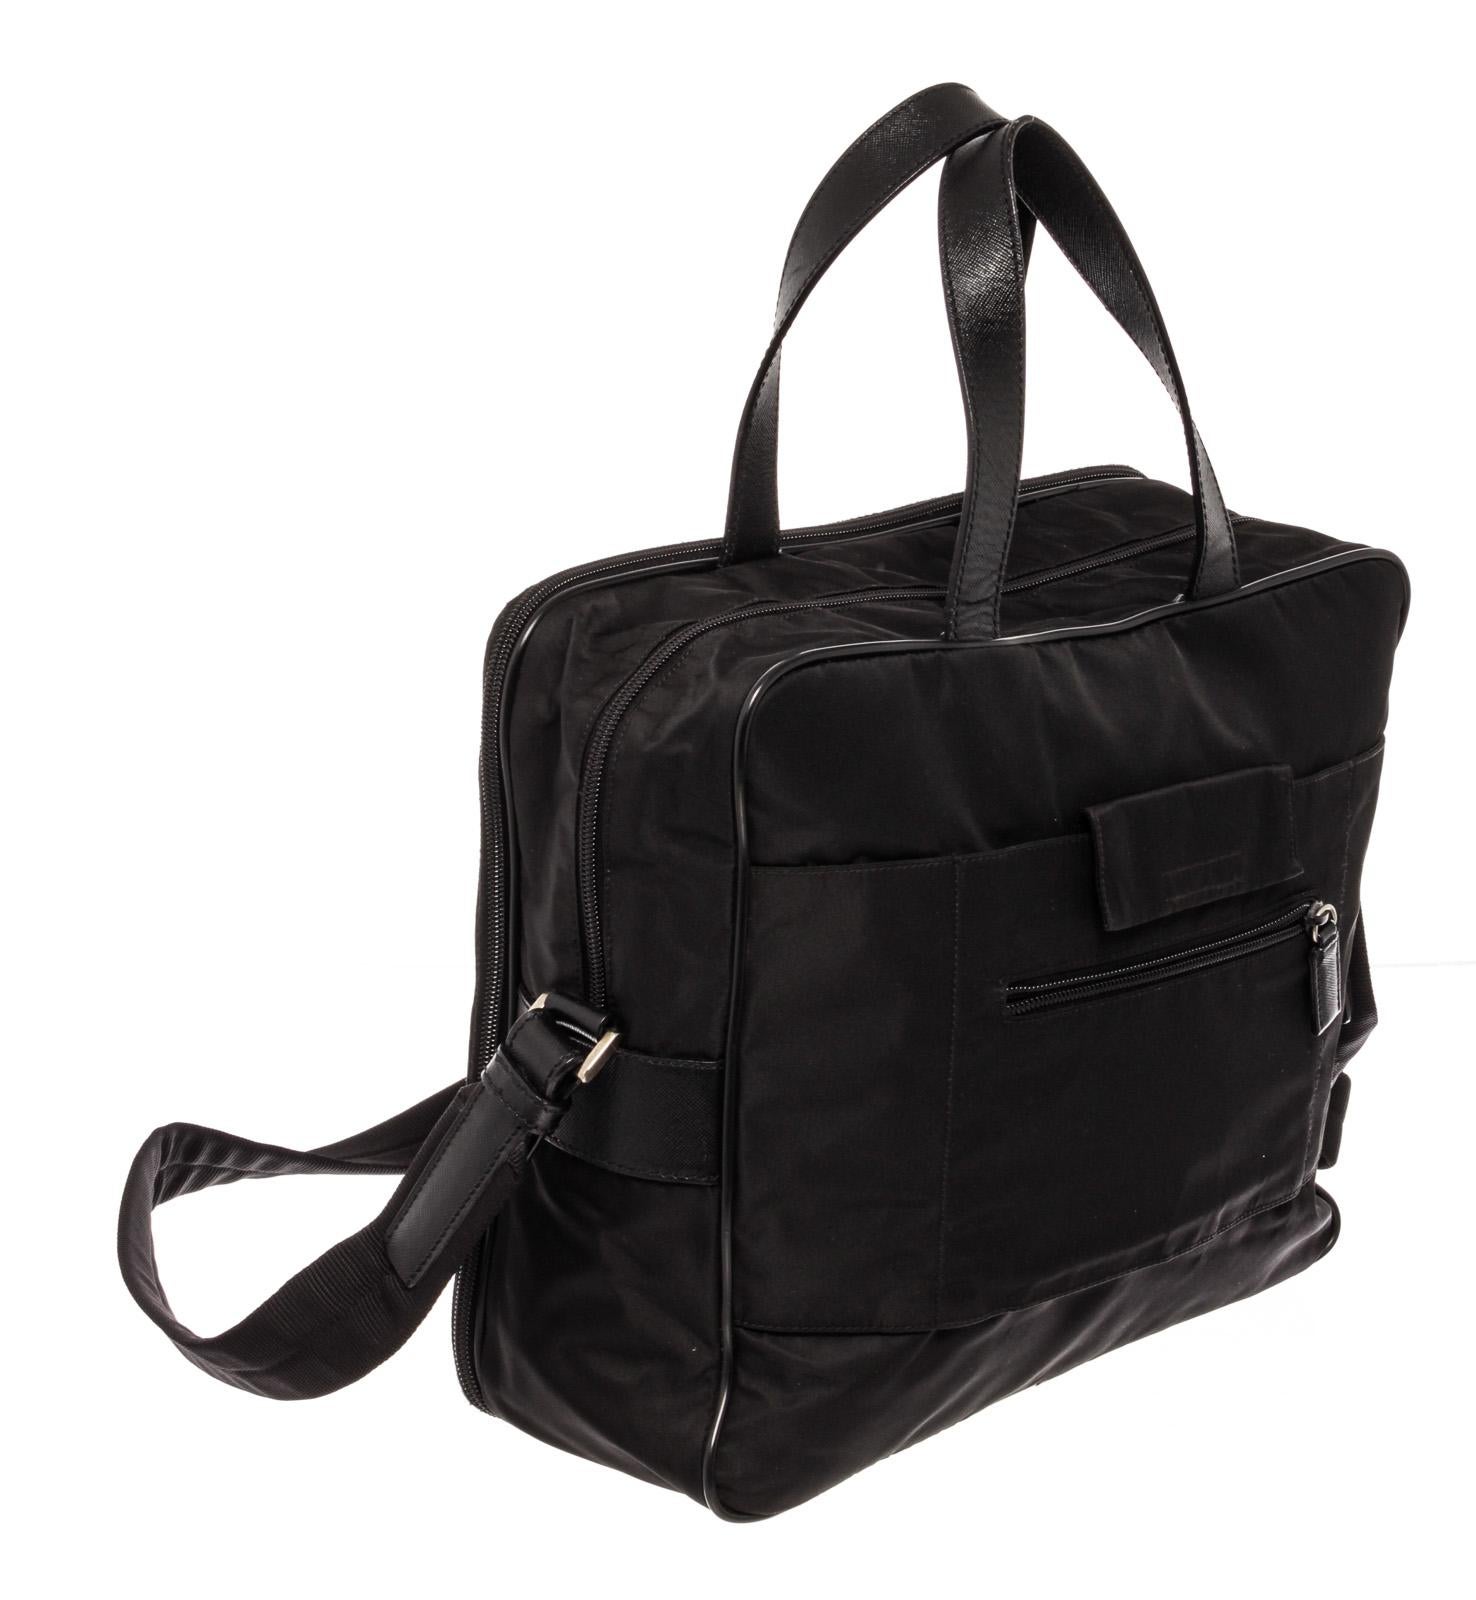 Prada Black Nylon Leather Messenger Bag with leather, gold-tone hardware, trim leather, interior slip pocket, dual top handle, shoulder strap and zipper closure.

61228MSC